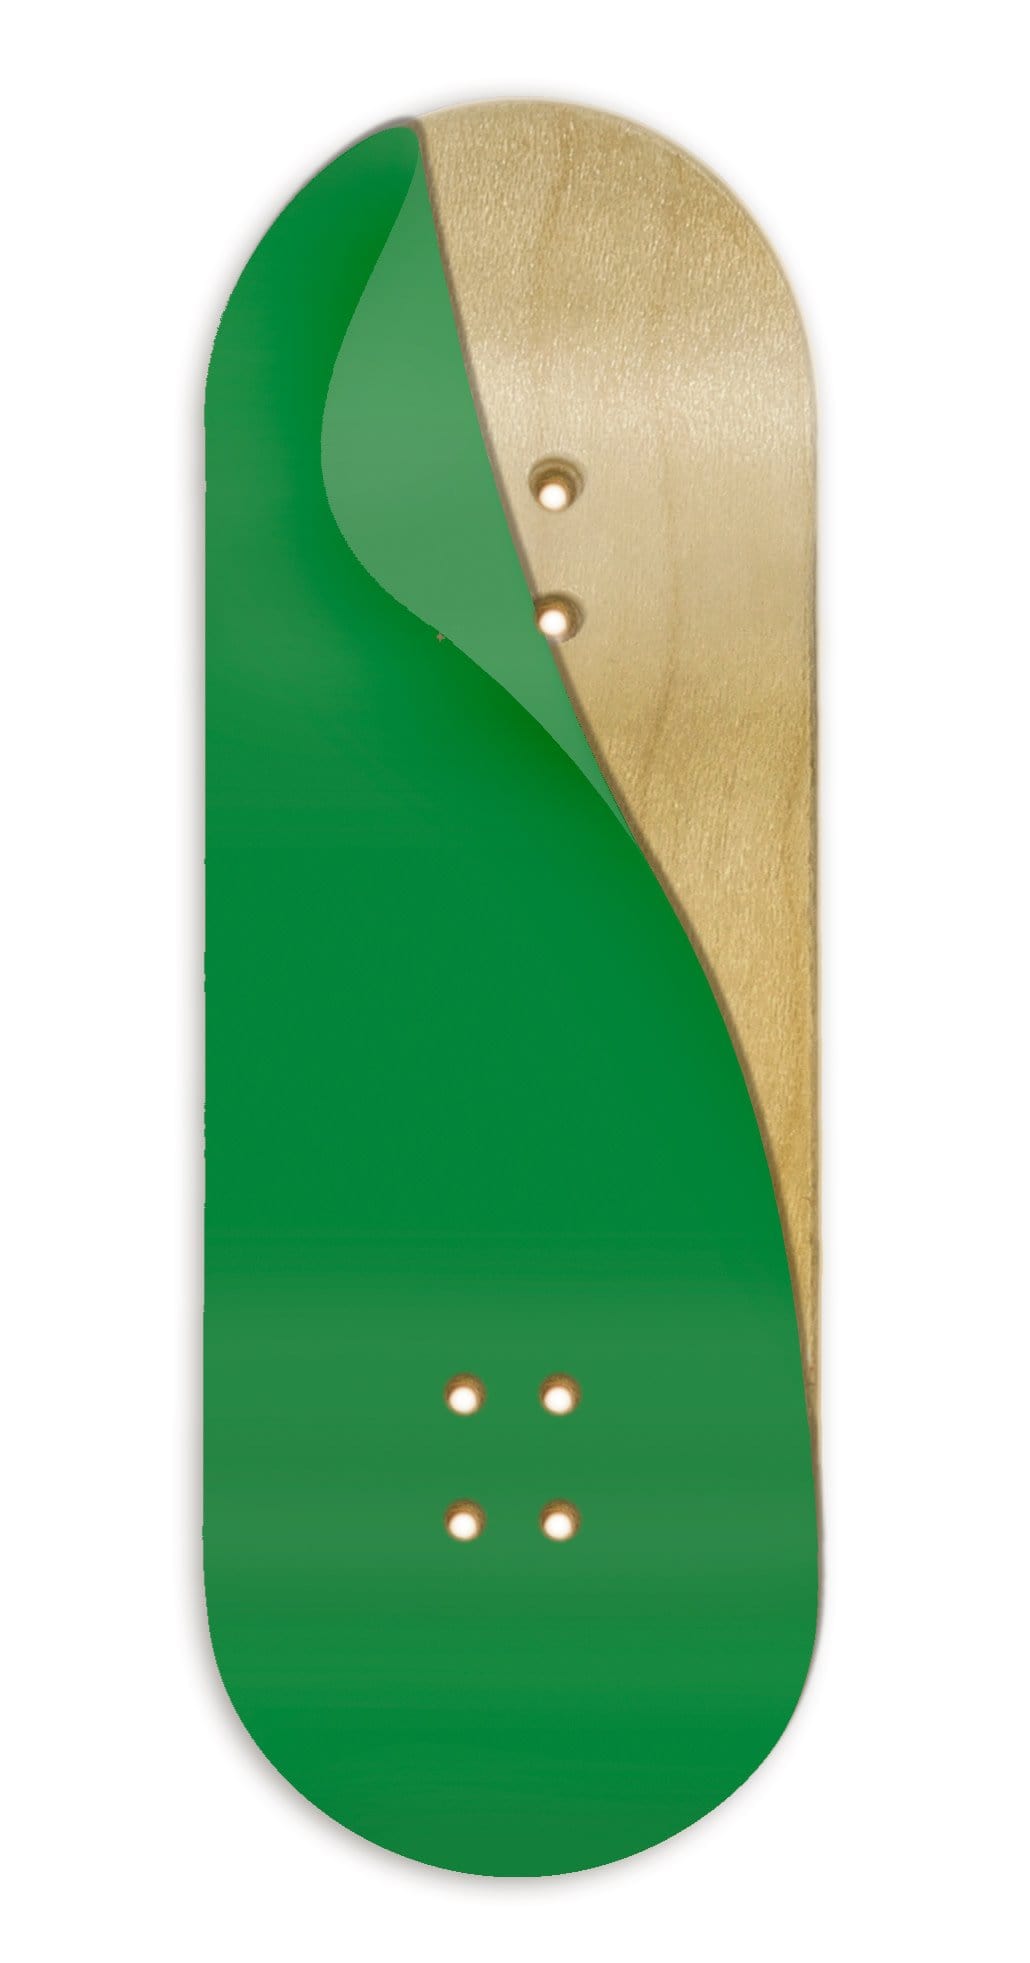 Teak Tuning Teak Swap Fingerboard Deck & ColorBlock Wrap - "Lucky Green" - 32mm x 97mm